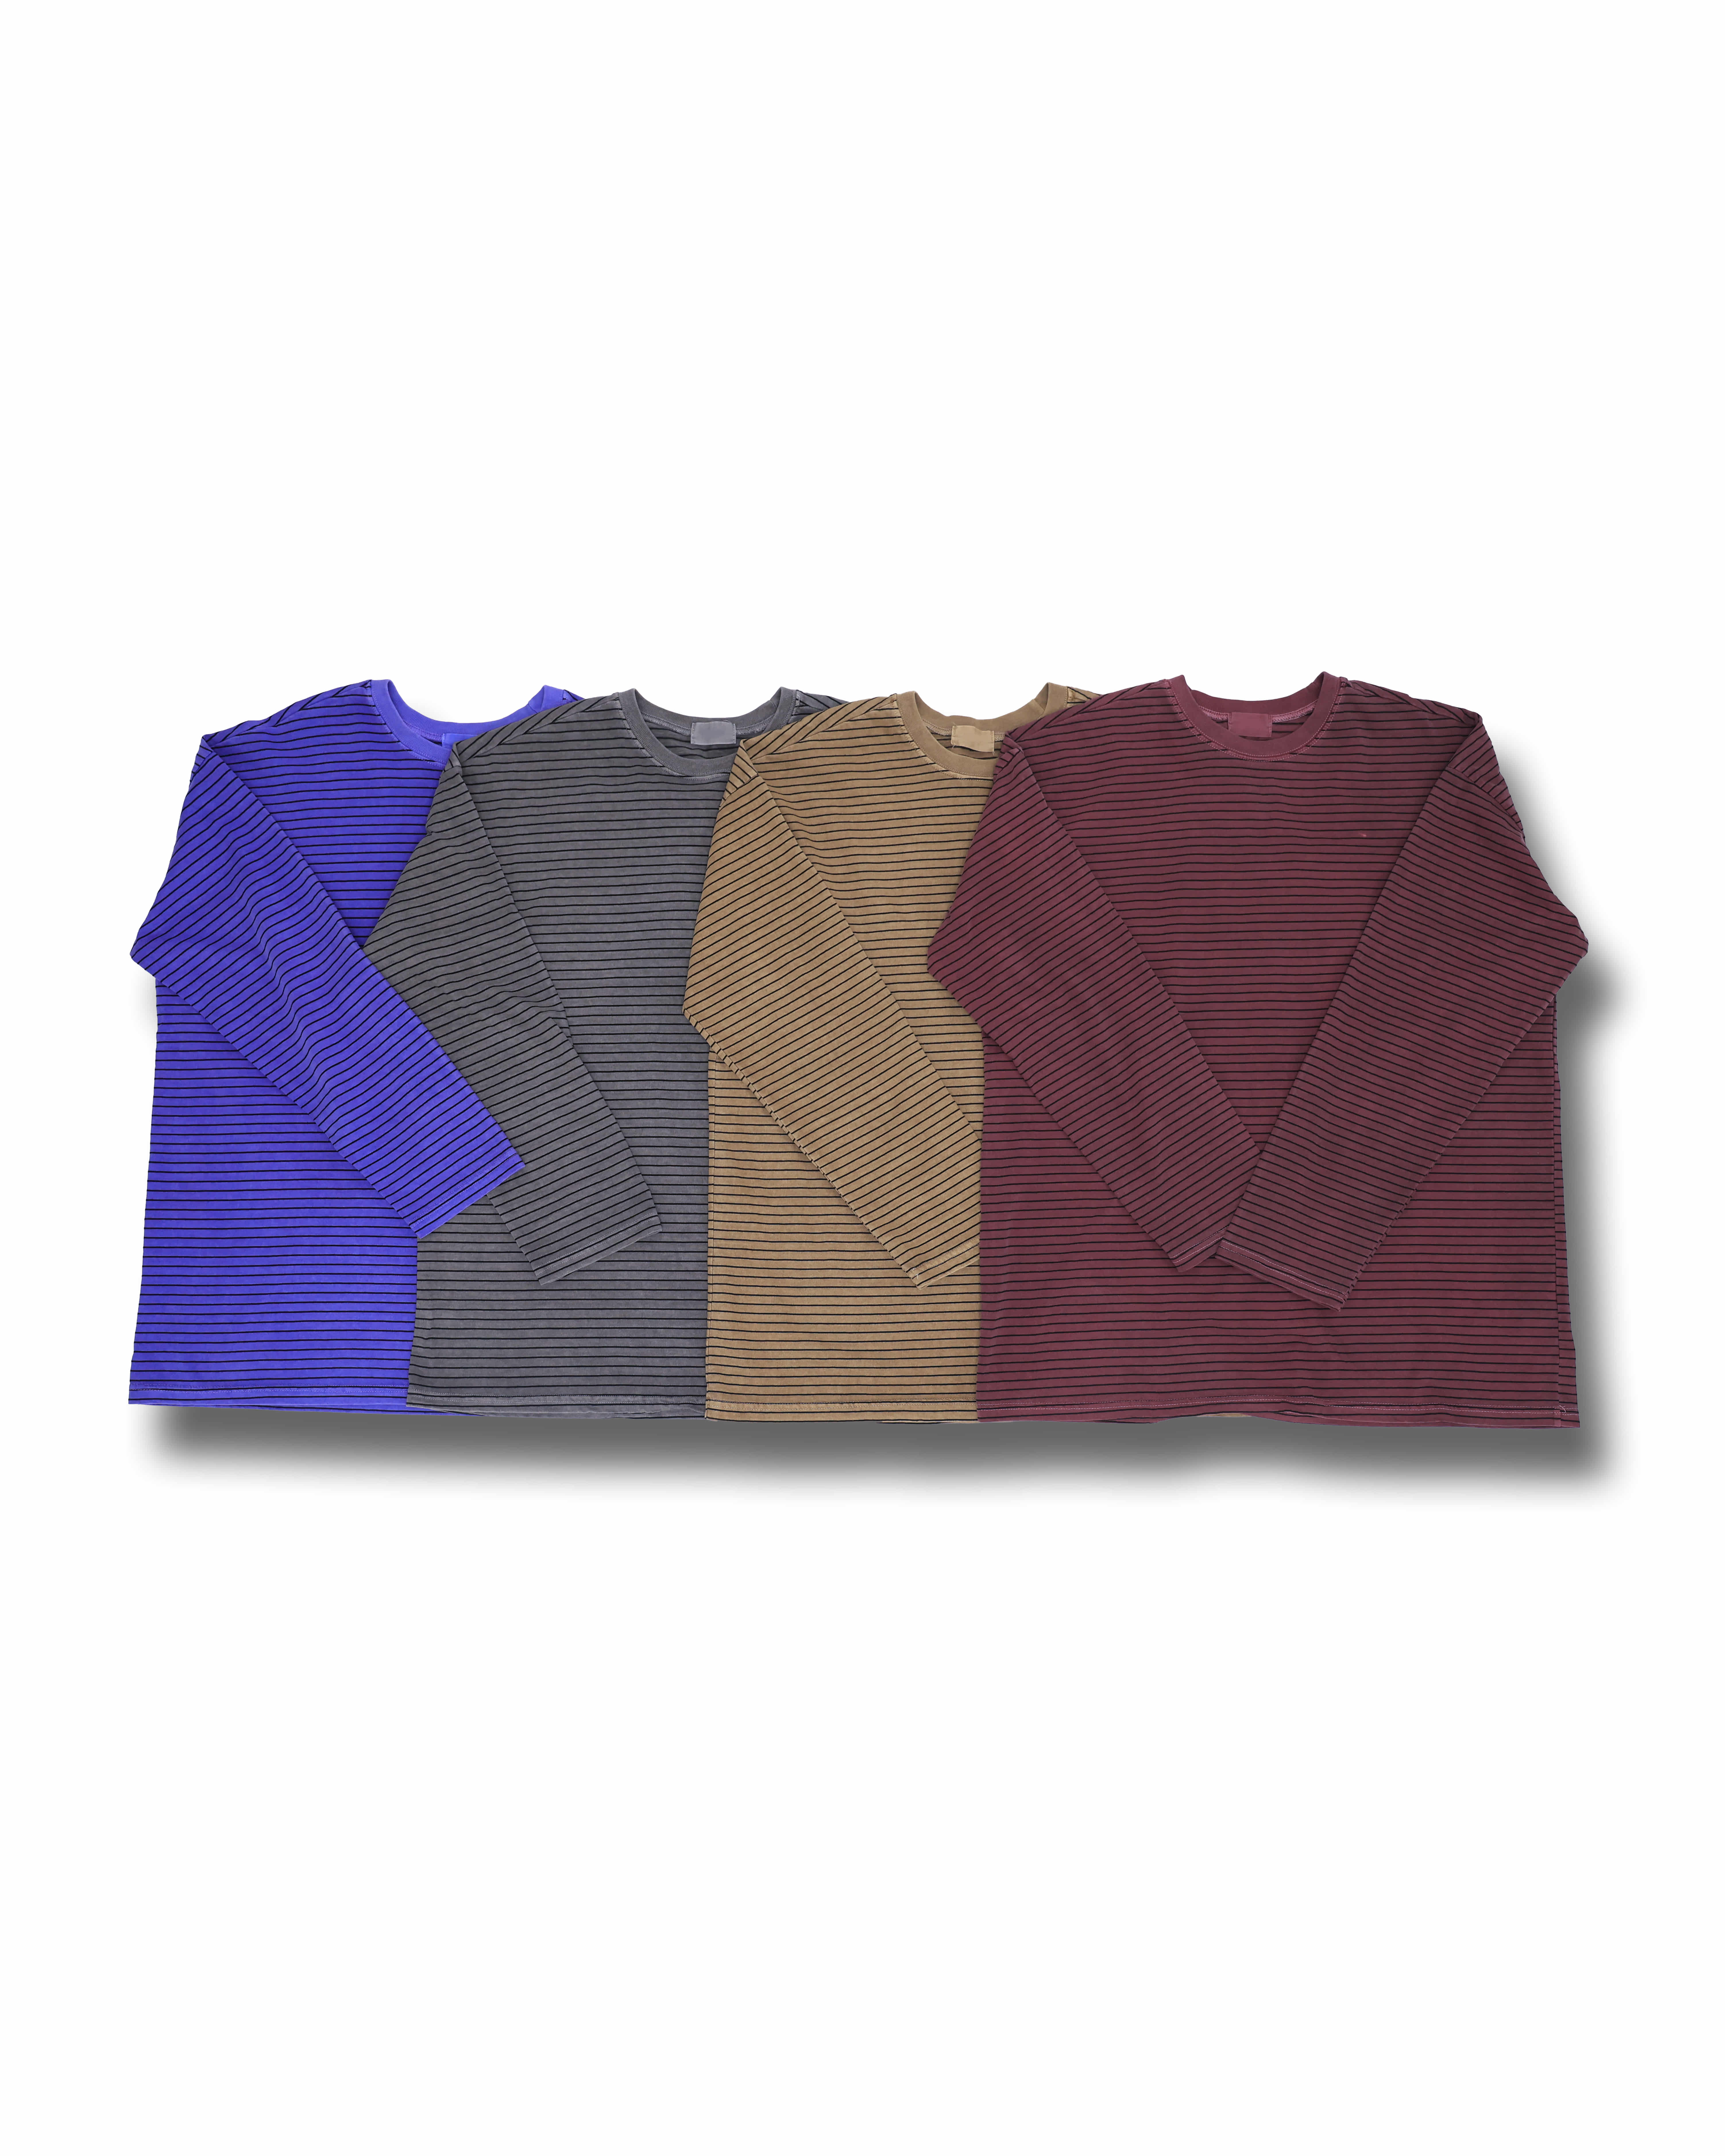 Pigment Stripe Long Sleeves (Charcoal/Wine/Purple/Brown)